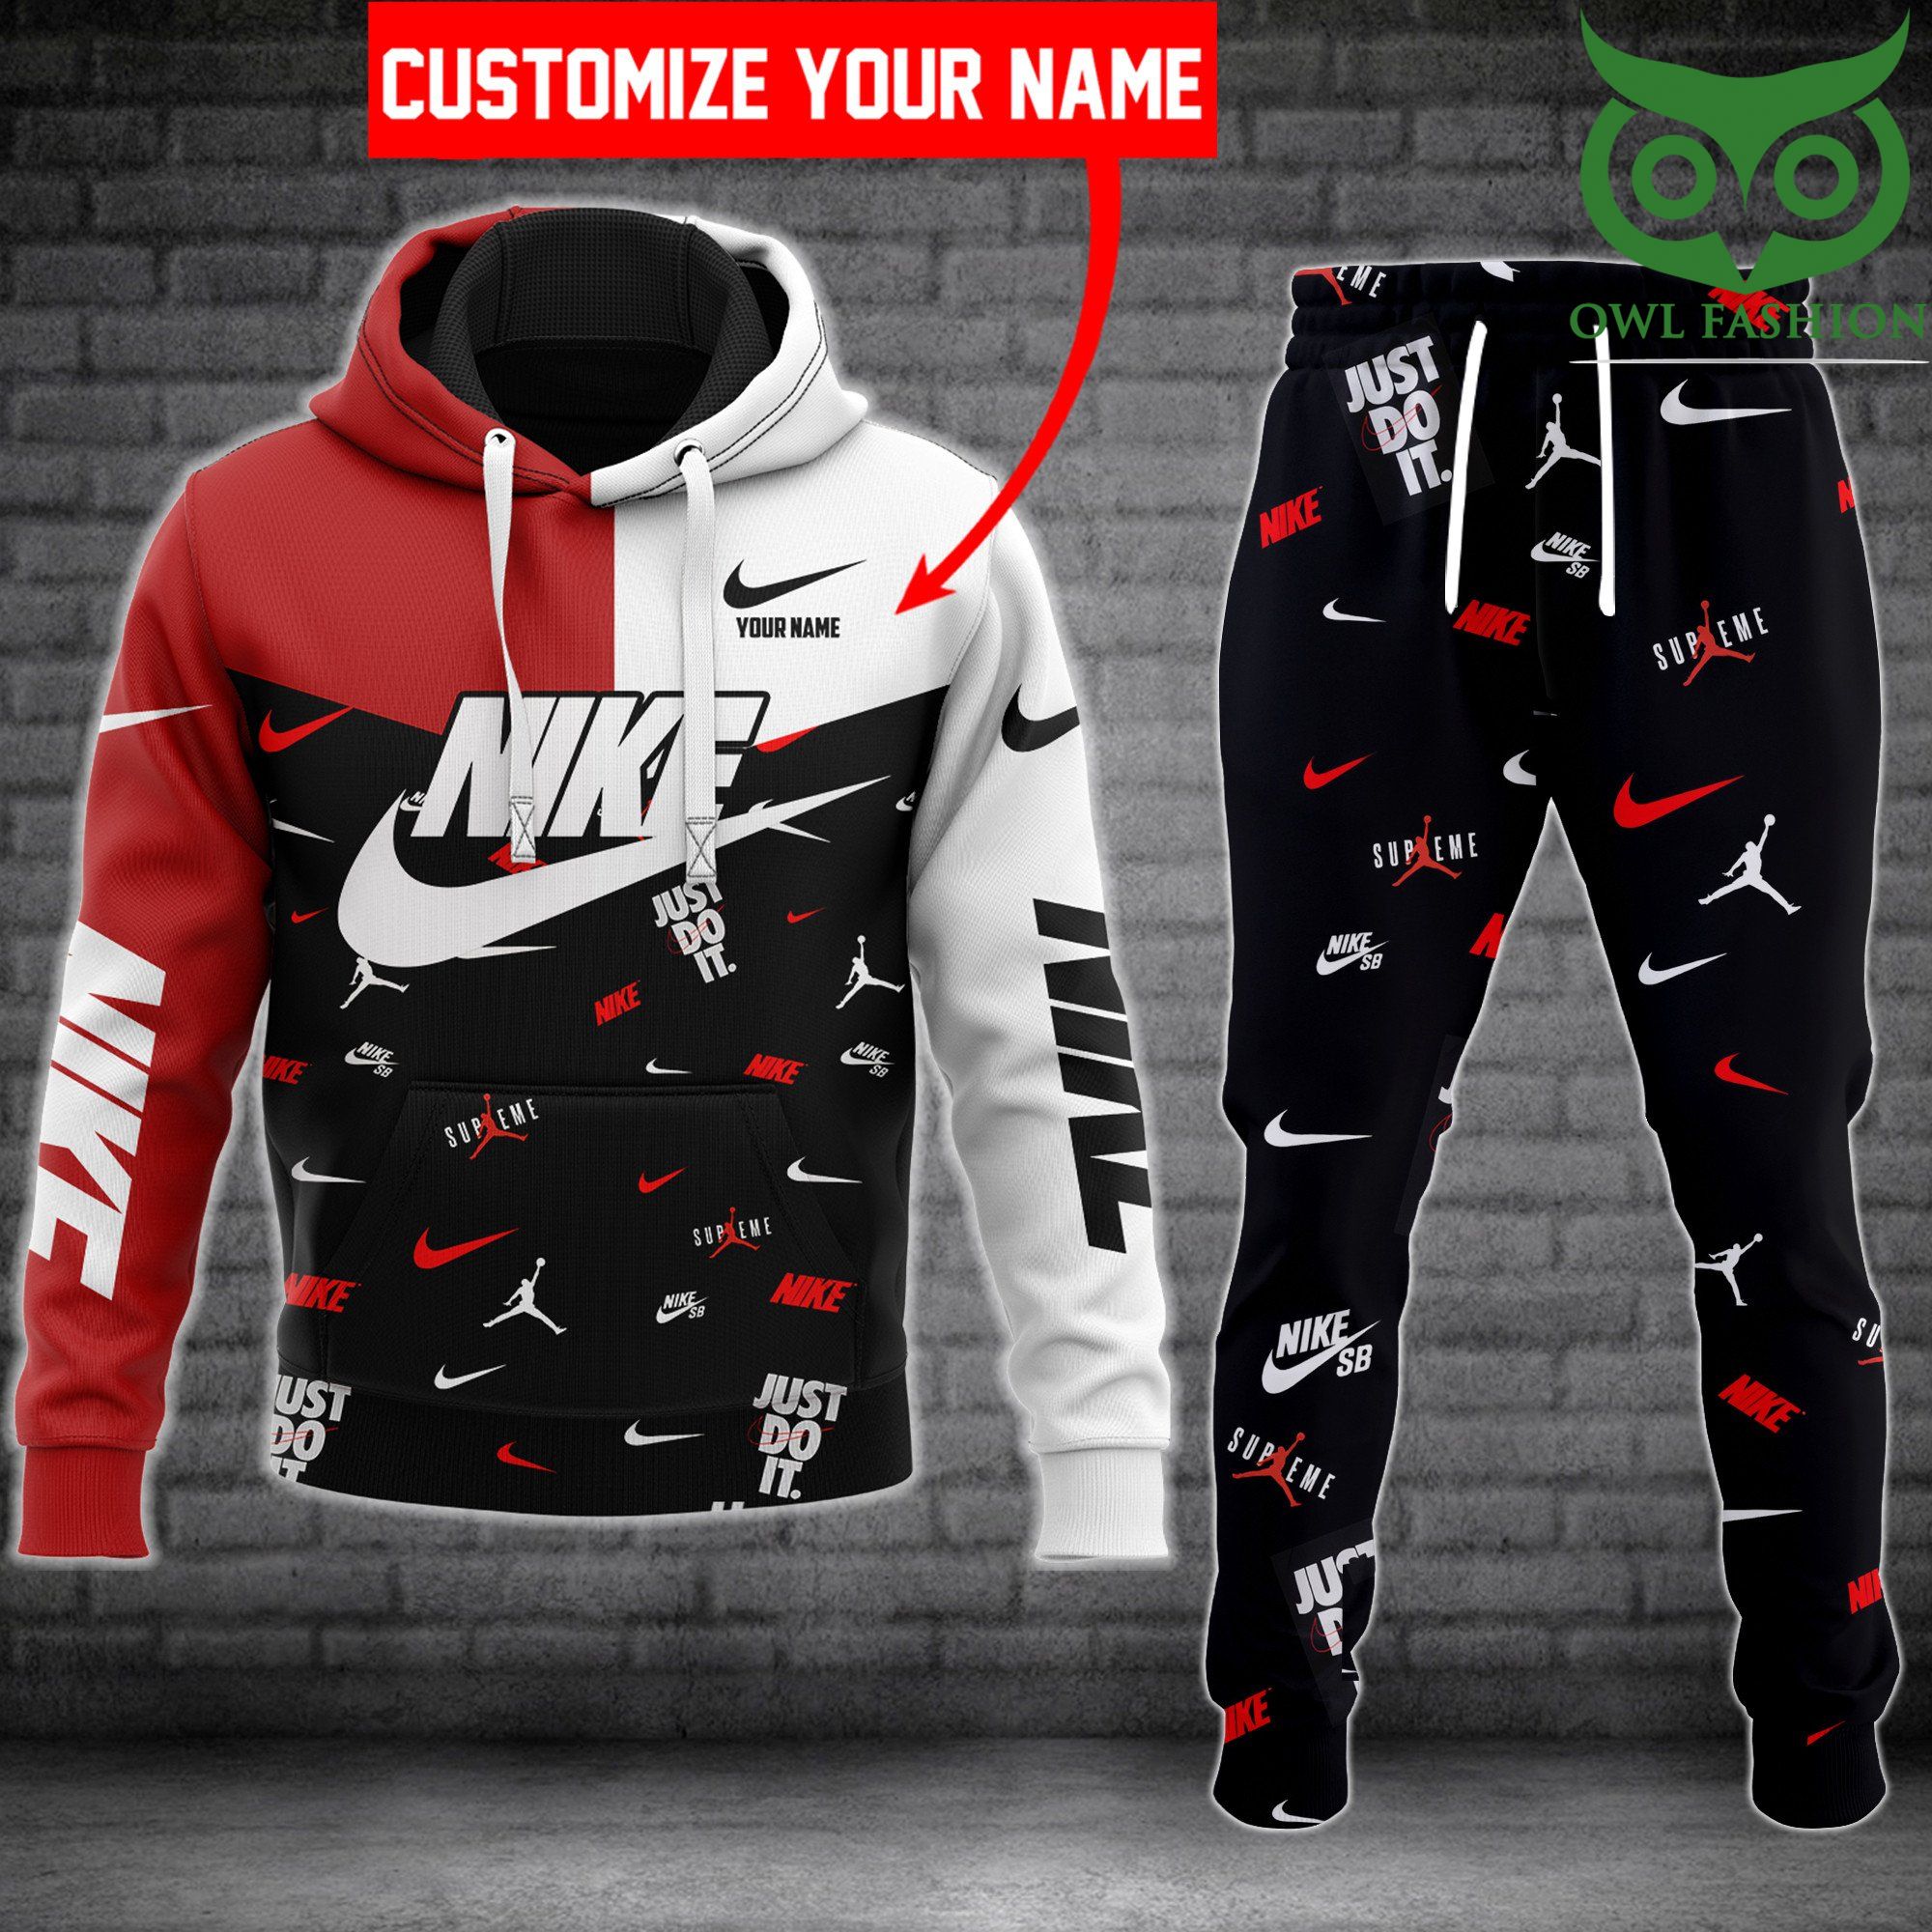 27 Nike Red Jordan personalized hoodies and sweatpants